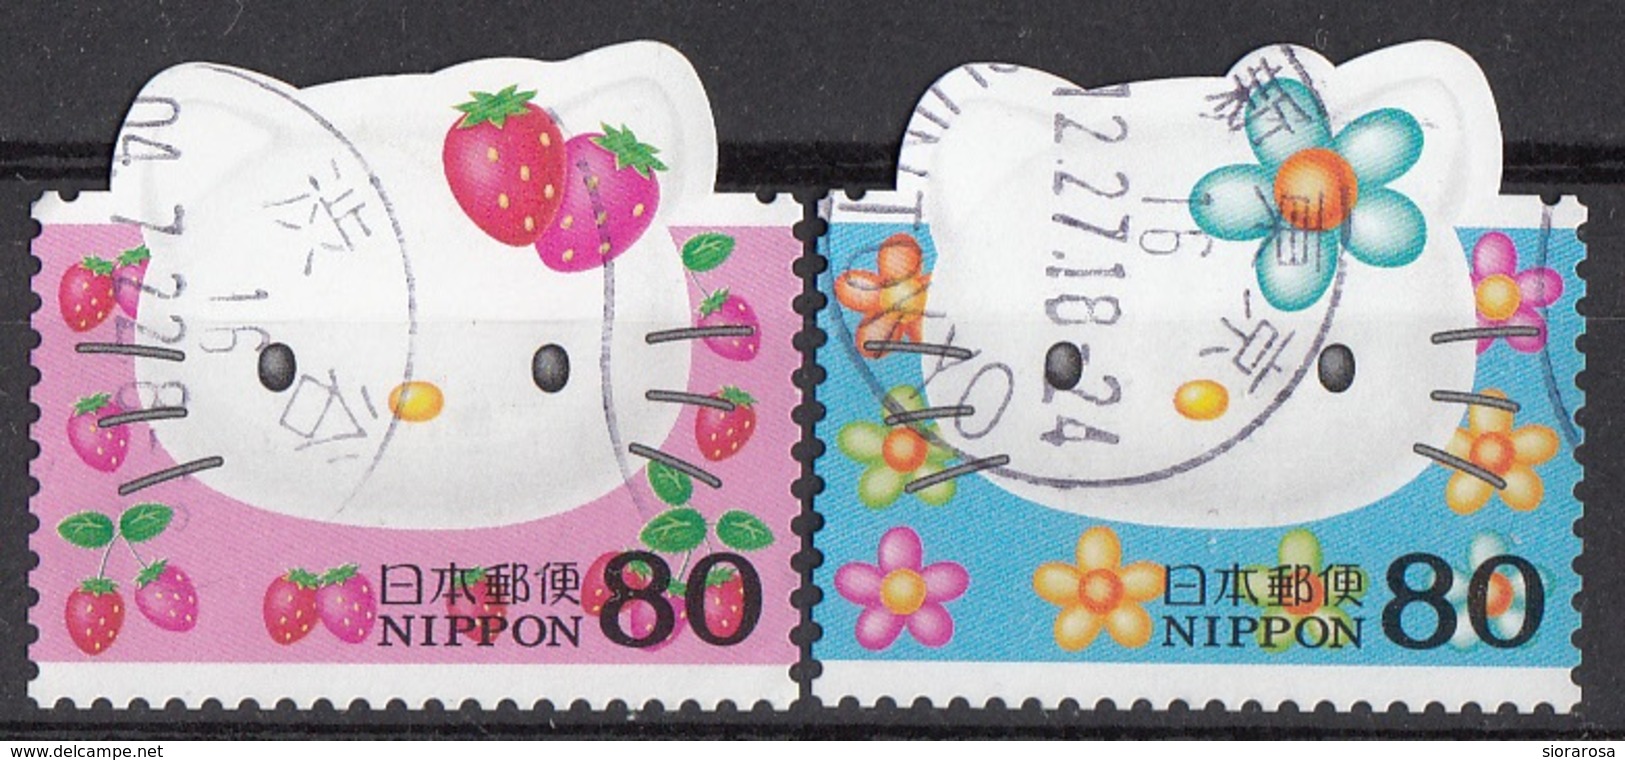 Giappone 2004 Sc. 2884cd Hello Kitty Gatti  Nippon Japan Fumetti Cartoni Animati Cartoons - Used Stamps